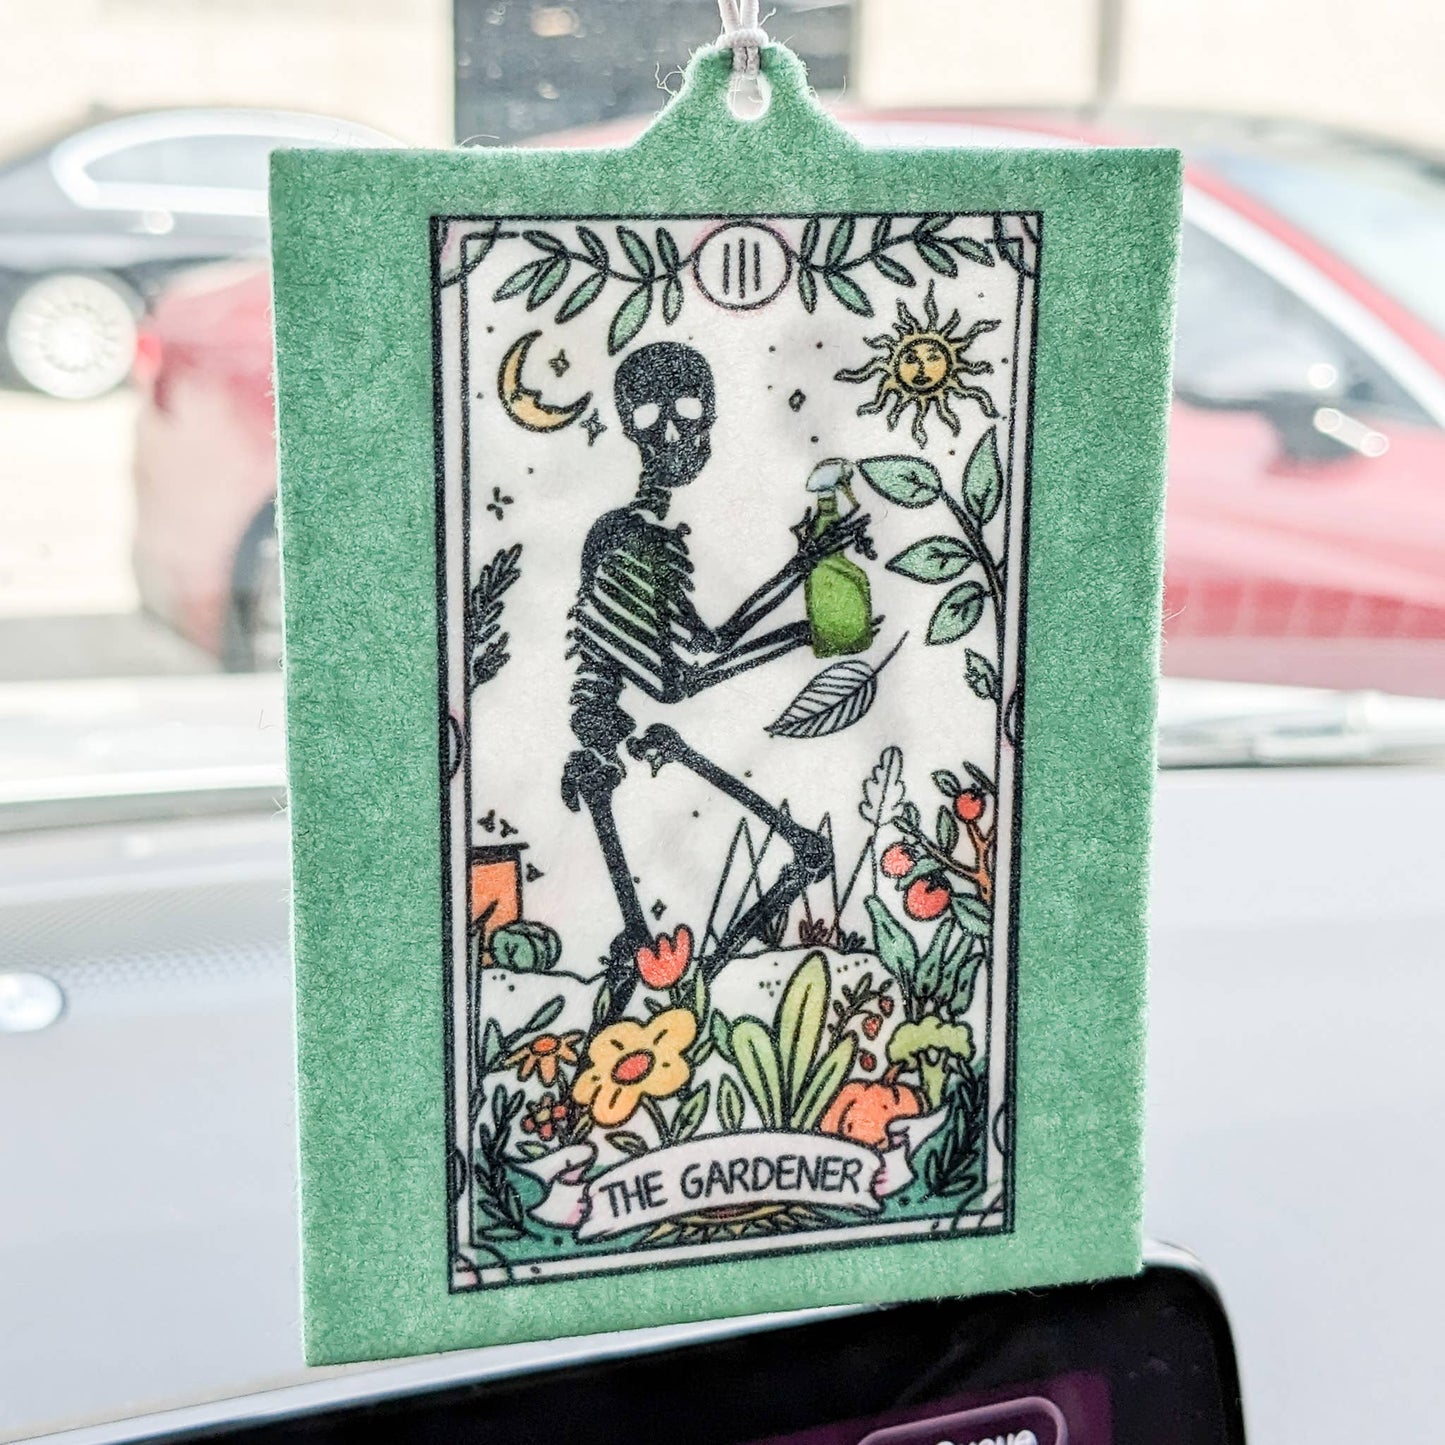 The Gardener Tarot Card Scent-Your-Own Car Freshener